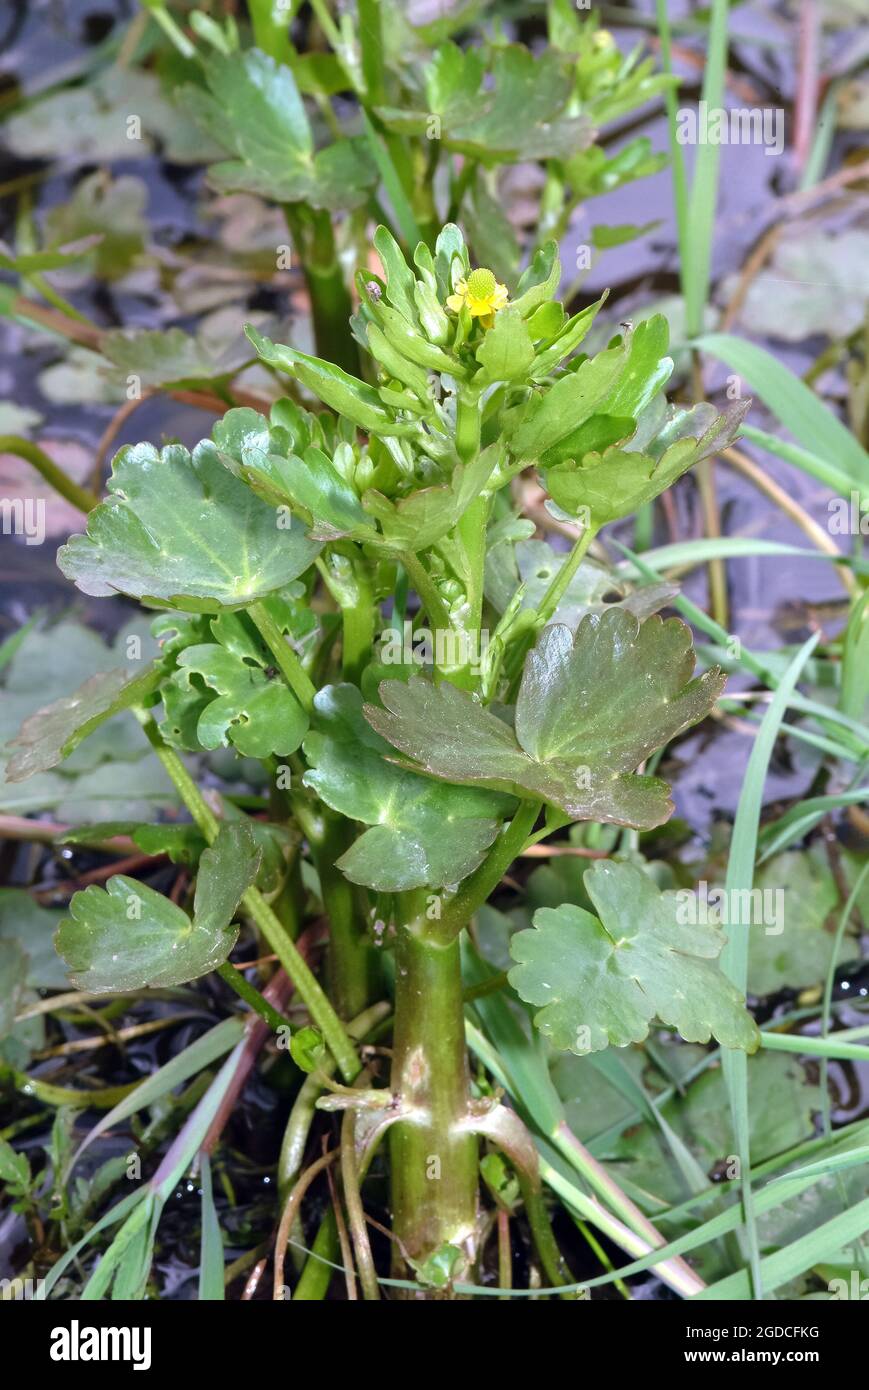 celery-leaved buttercup, celery-leaf buttercup, cursed buttercup, Gift-Hahnenfuß, Ranunculus sceleratus, torzsikaboglárka, Hungary, Europe Stock Photo